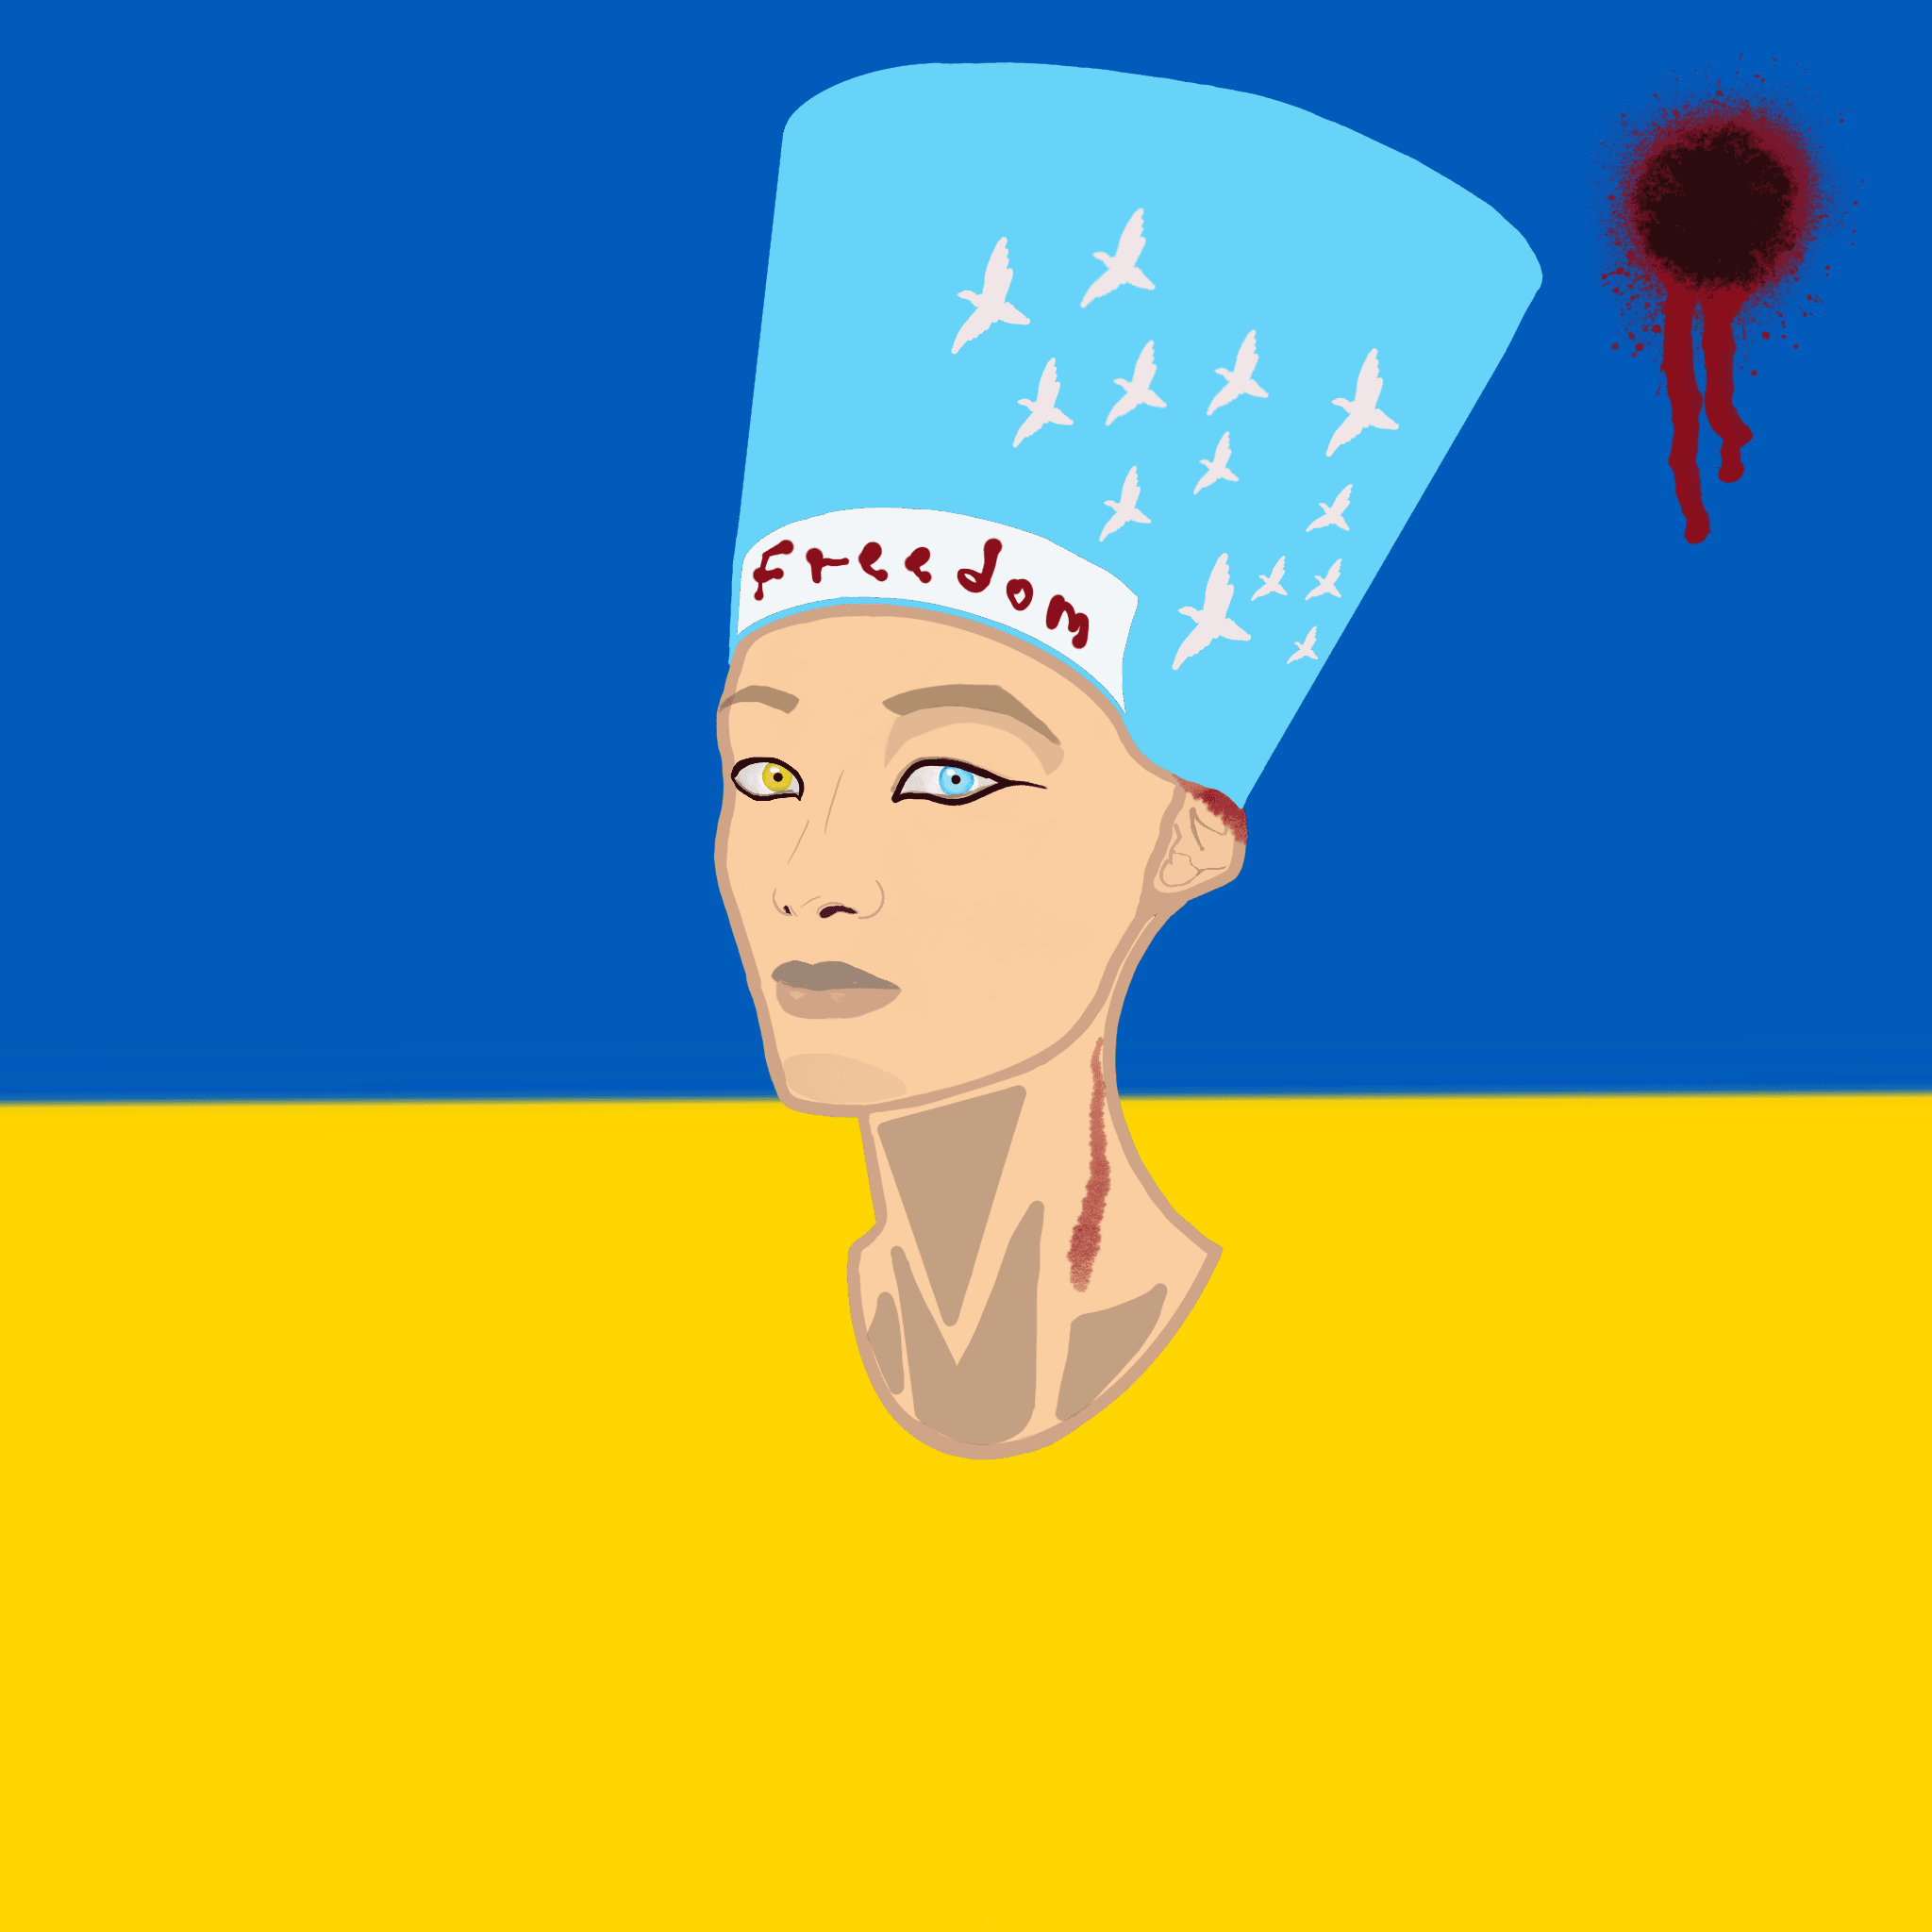 FOR UKRAINE